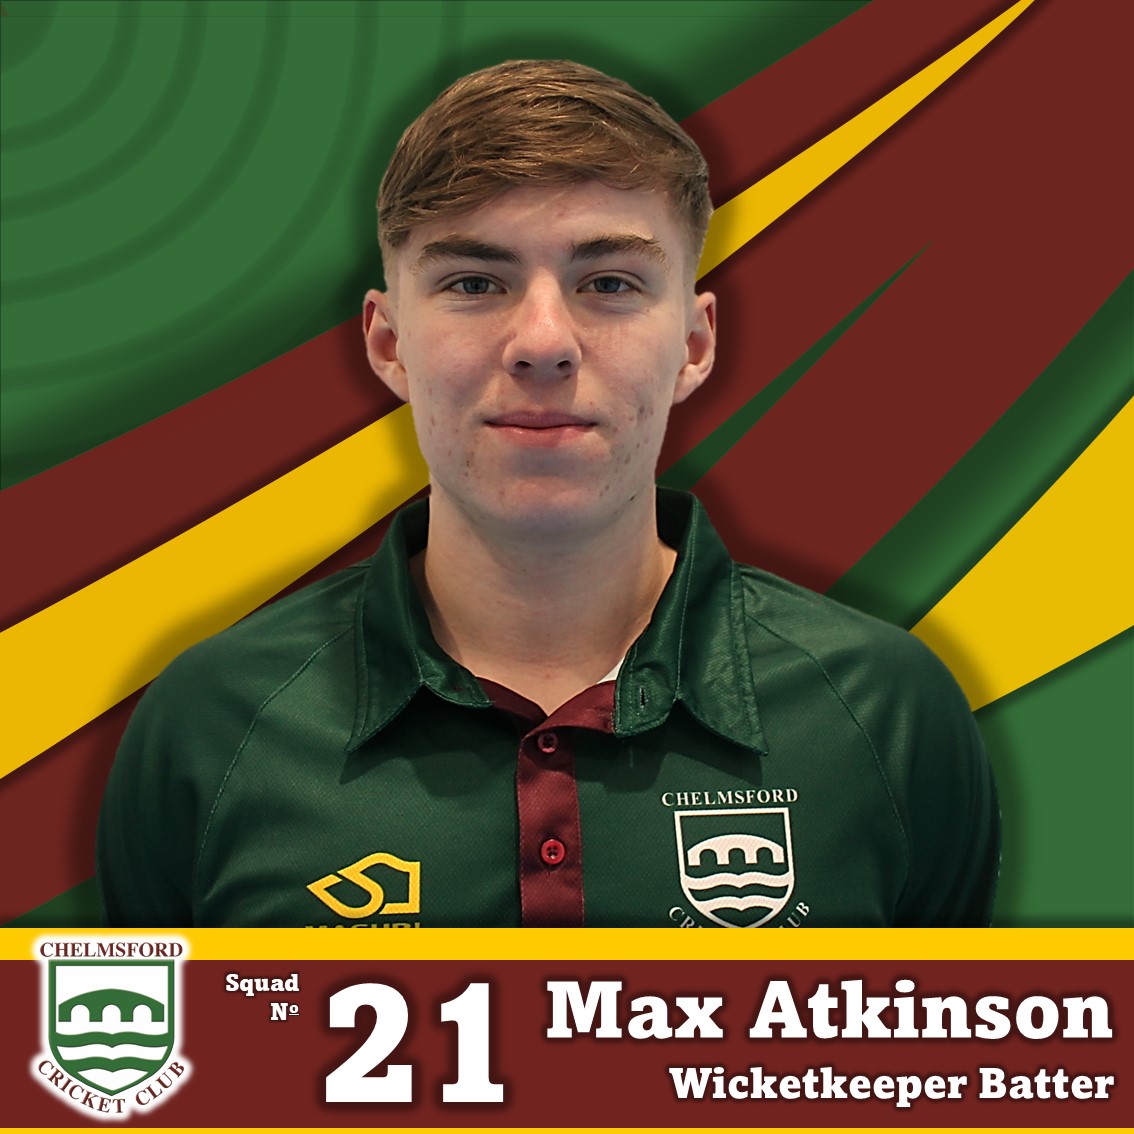 Max Atkinson